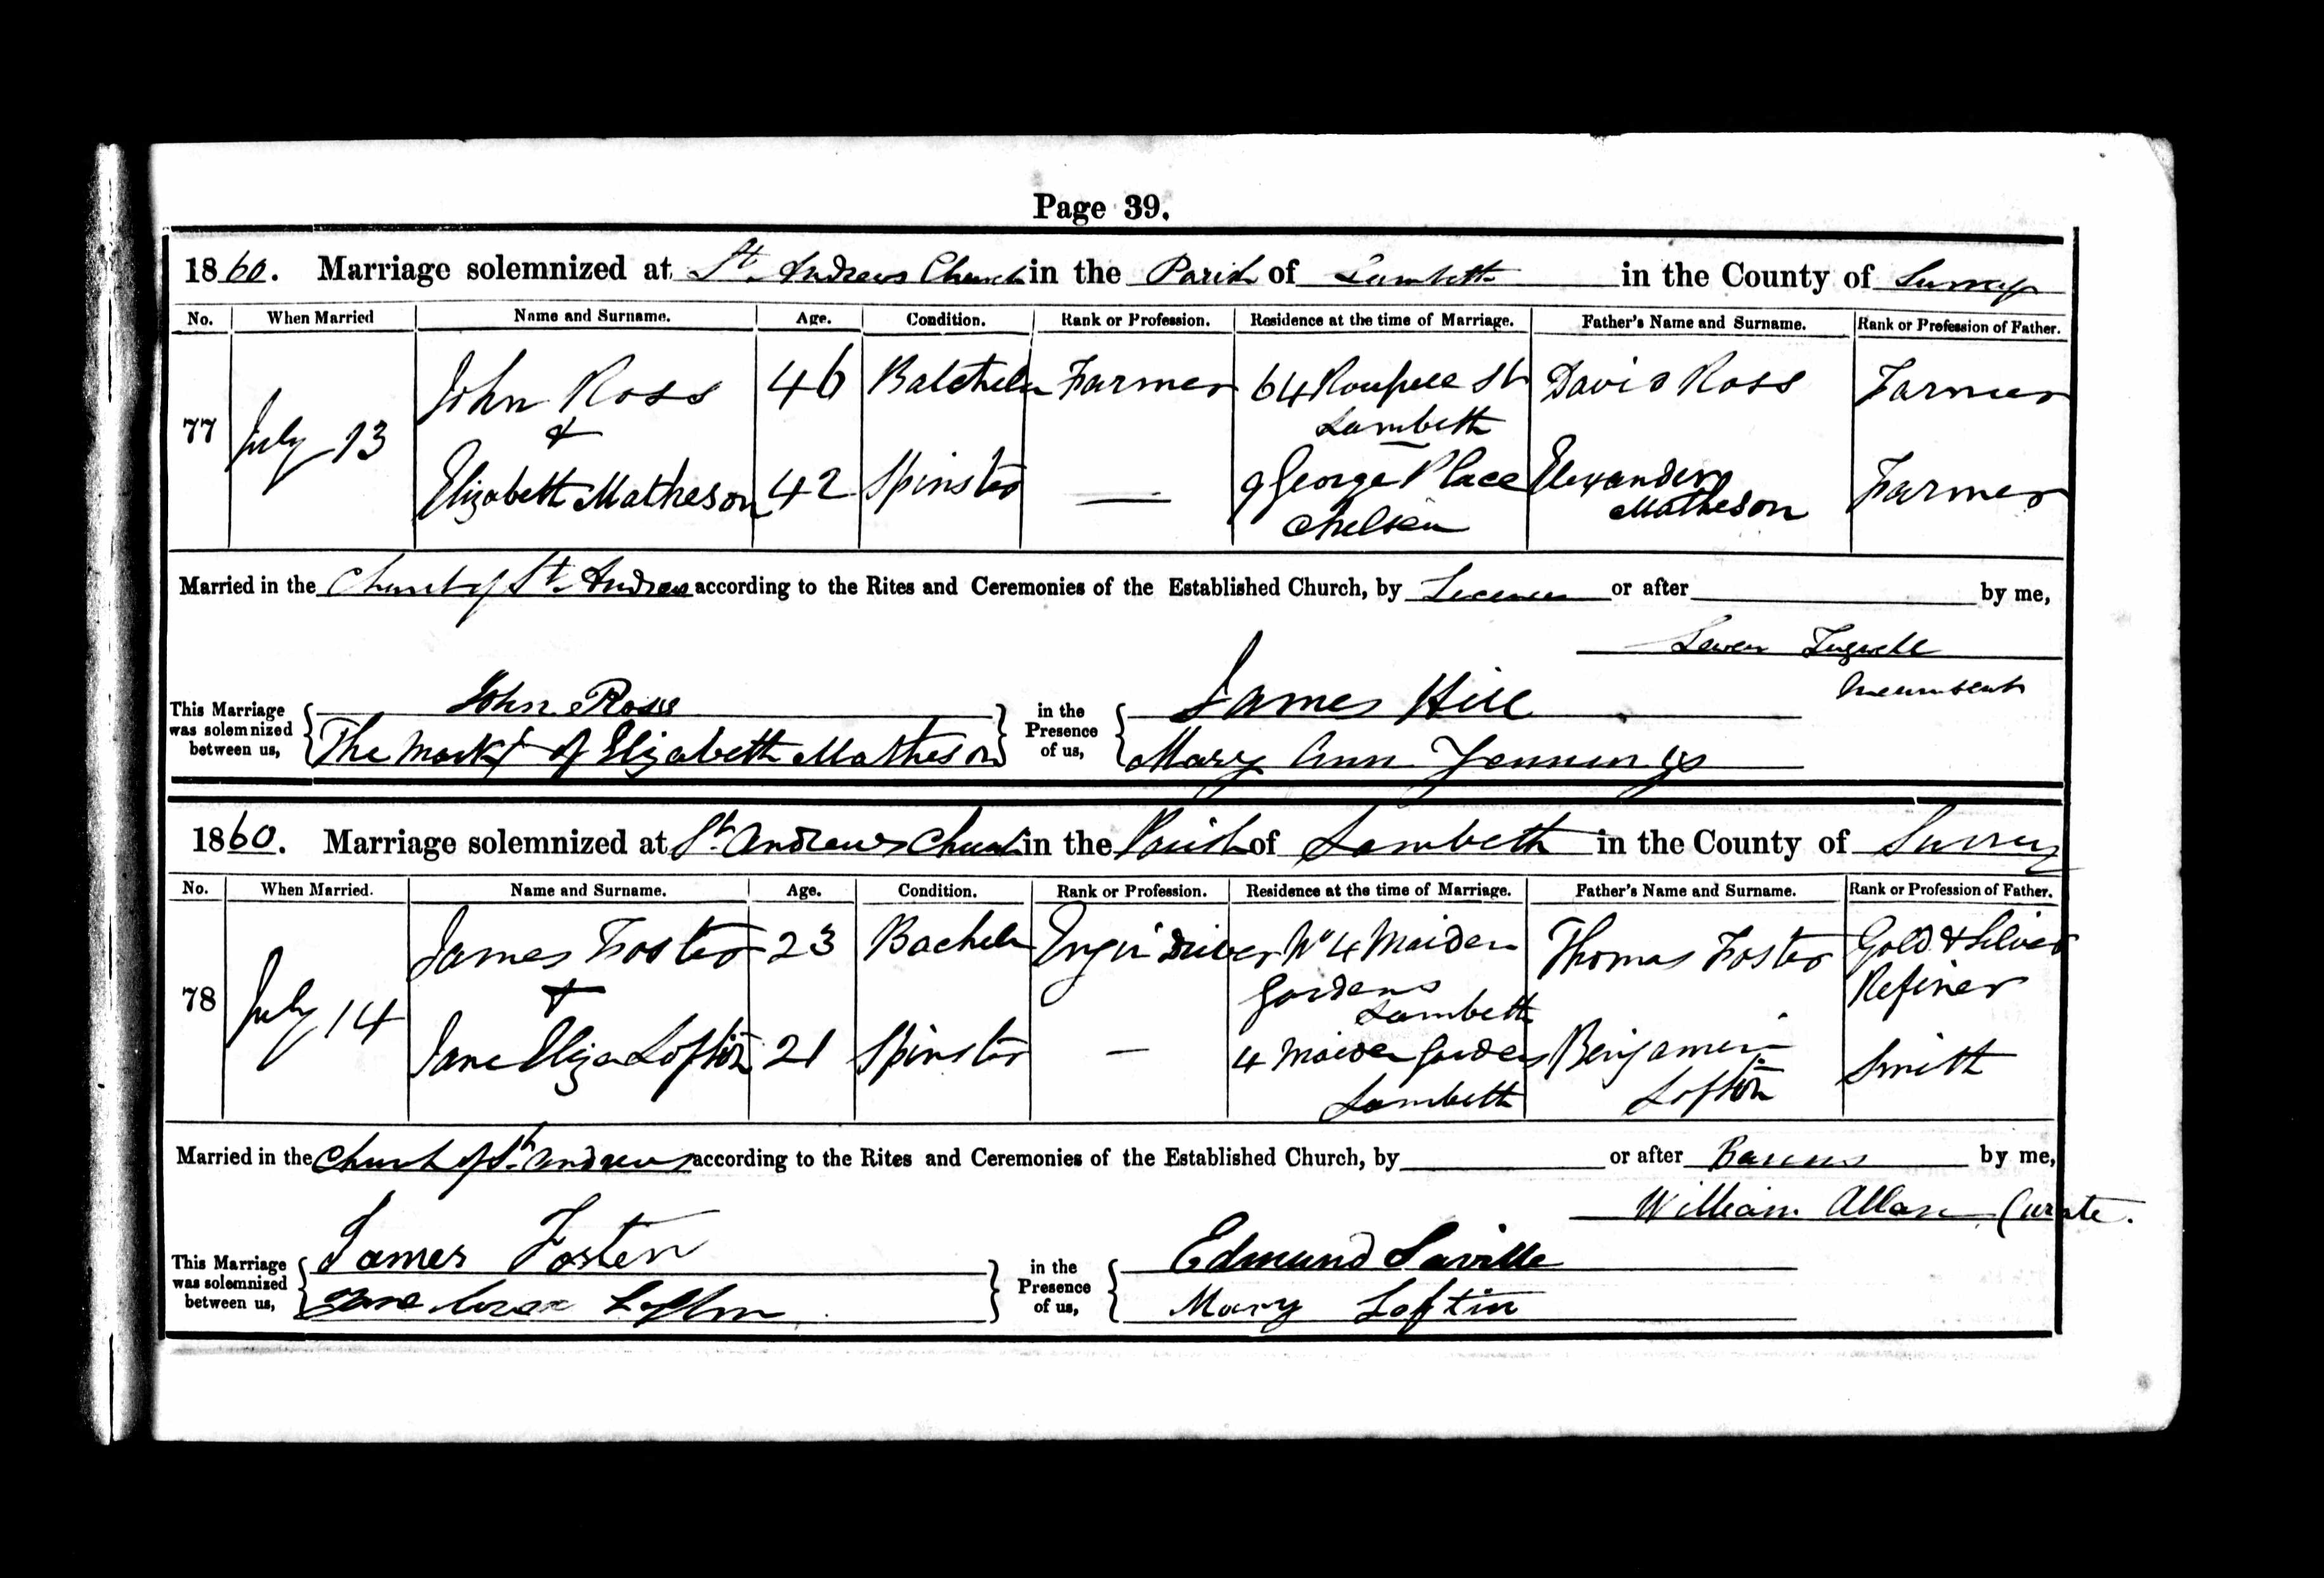 1860 marriage of Jane Eliza Loftin to James Foster